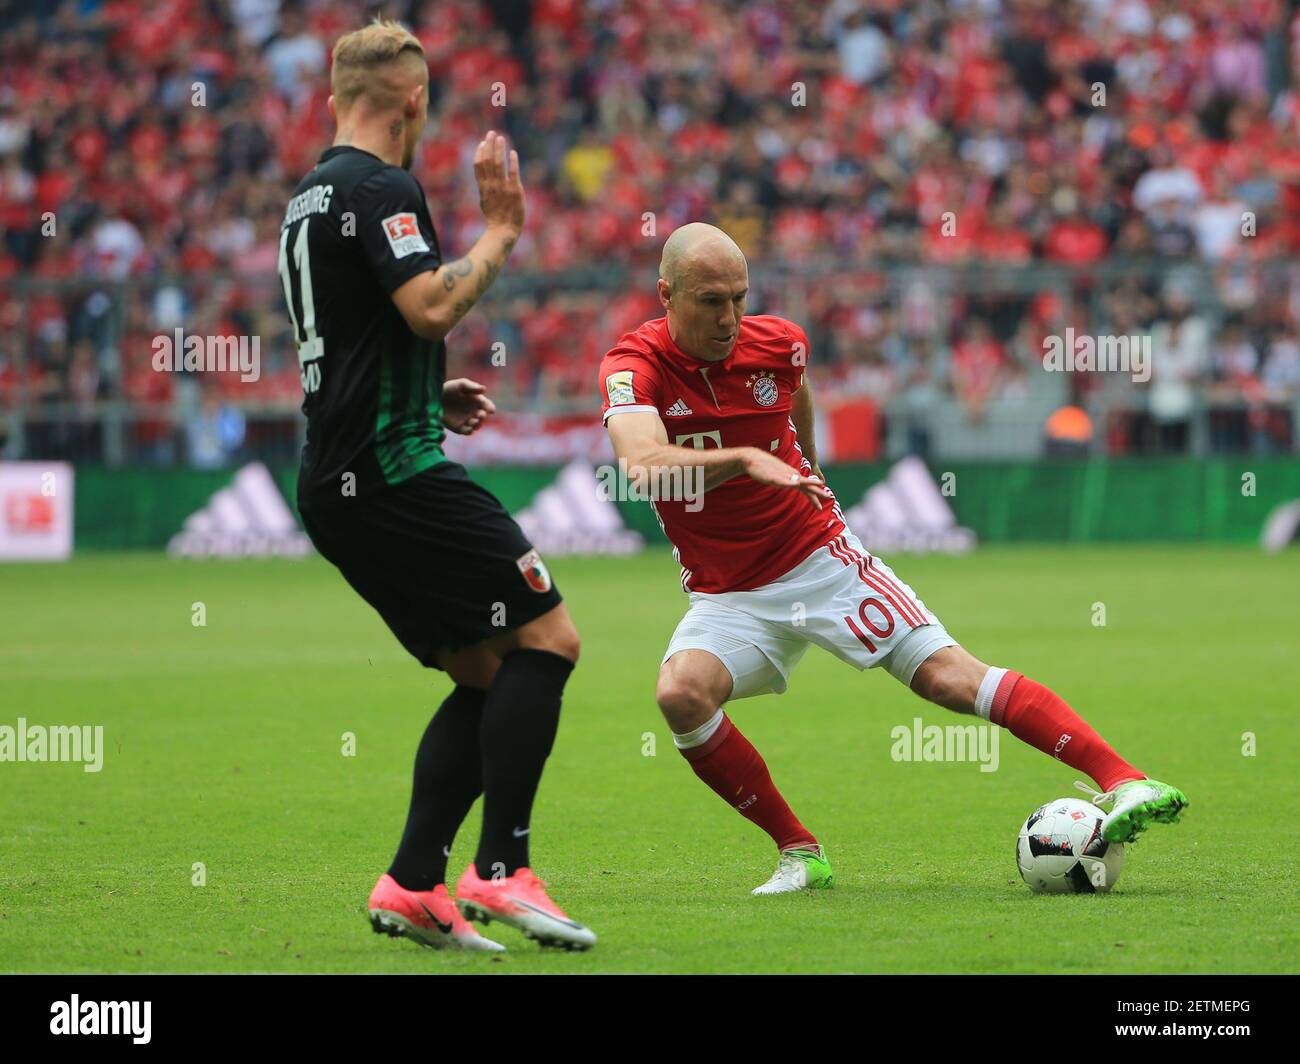 20170401, 1.BL, FC Bayern vs FC Augsburg, Allianz Arena Muenchen, Fussball, im Bild: Jonathan Schmid (FC Augsburg) vs Arjen Robben (FCB) *Copyright by: Philippe Ruiz Oberbrunner Strasse 2 81475 MŸnchen, Tel: 089 745 82 22, Mobil: 0177 29 39 408 ( MAIL: philippe ruiz@gmx.de ) Homepage: www.sportpressefoto-ruiz.de (Photo by Xinhua/Sipa USA)  Stock Photo